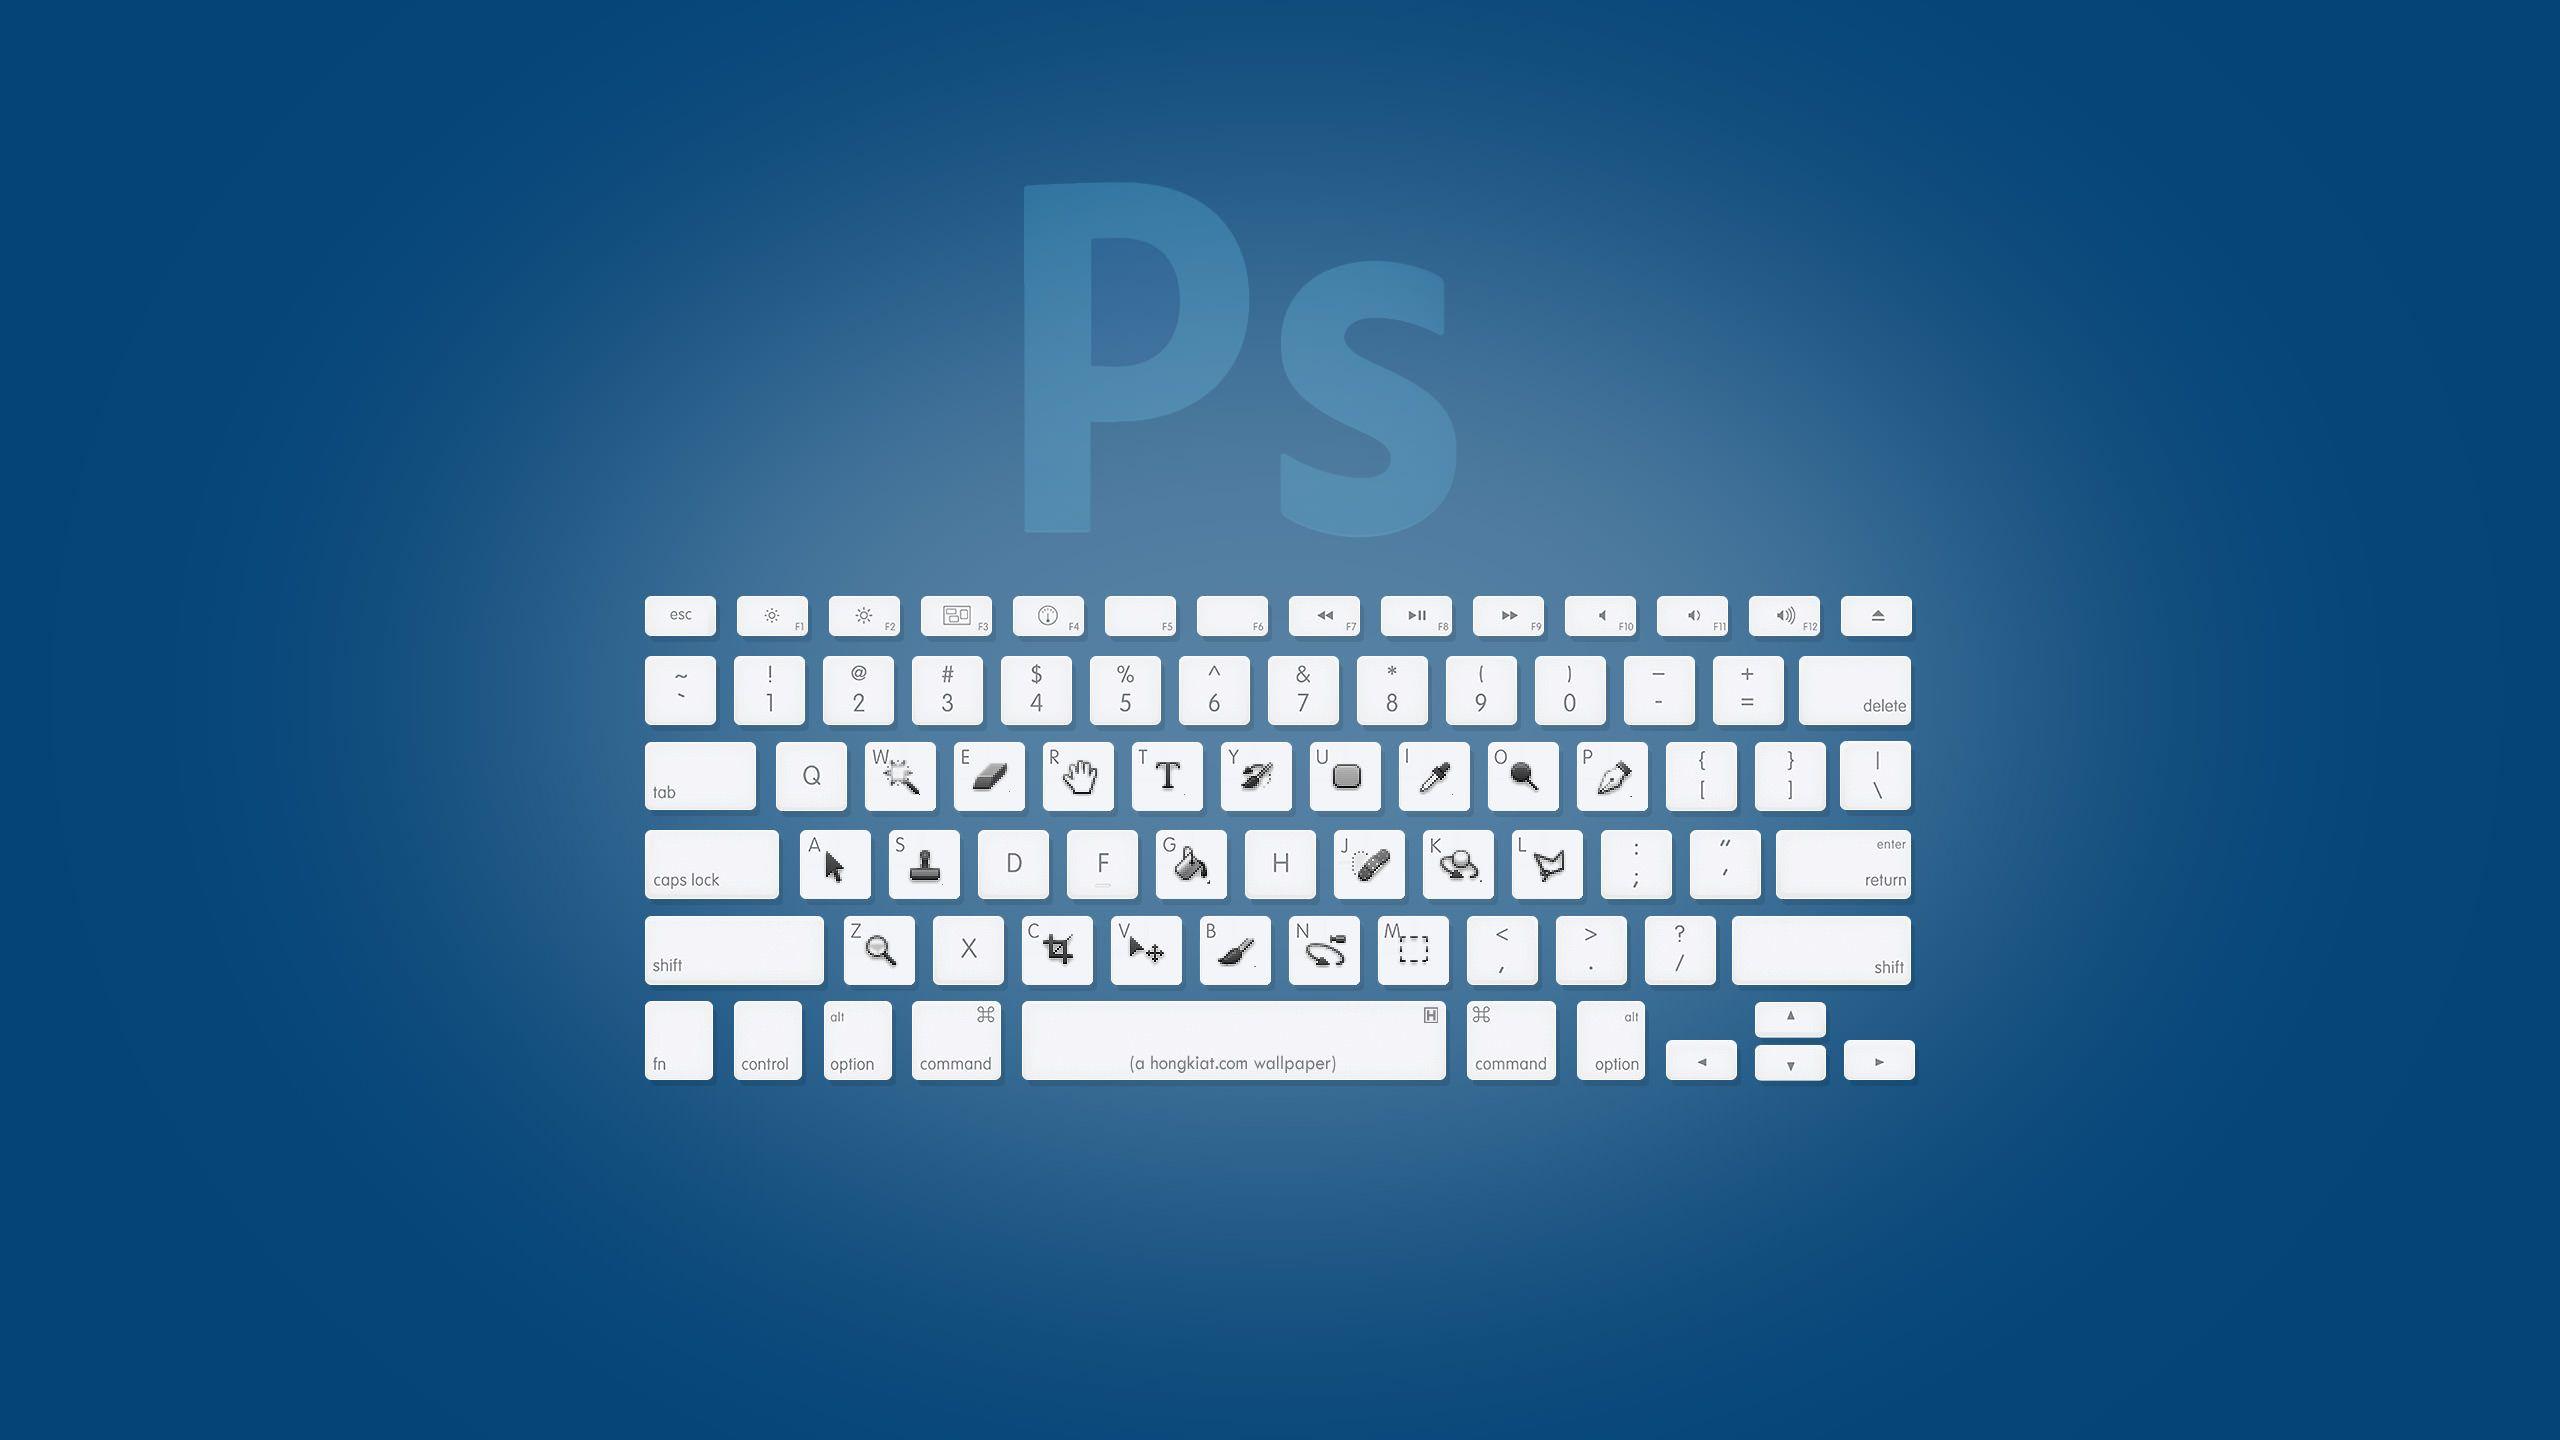 Adobe Creative Suite Toolbar Shortcut Wallpaper [Exclusive]